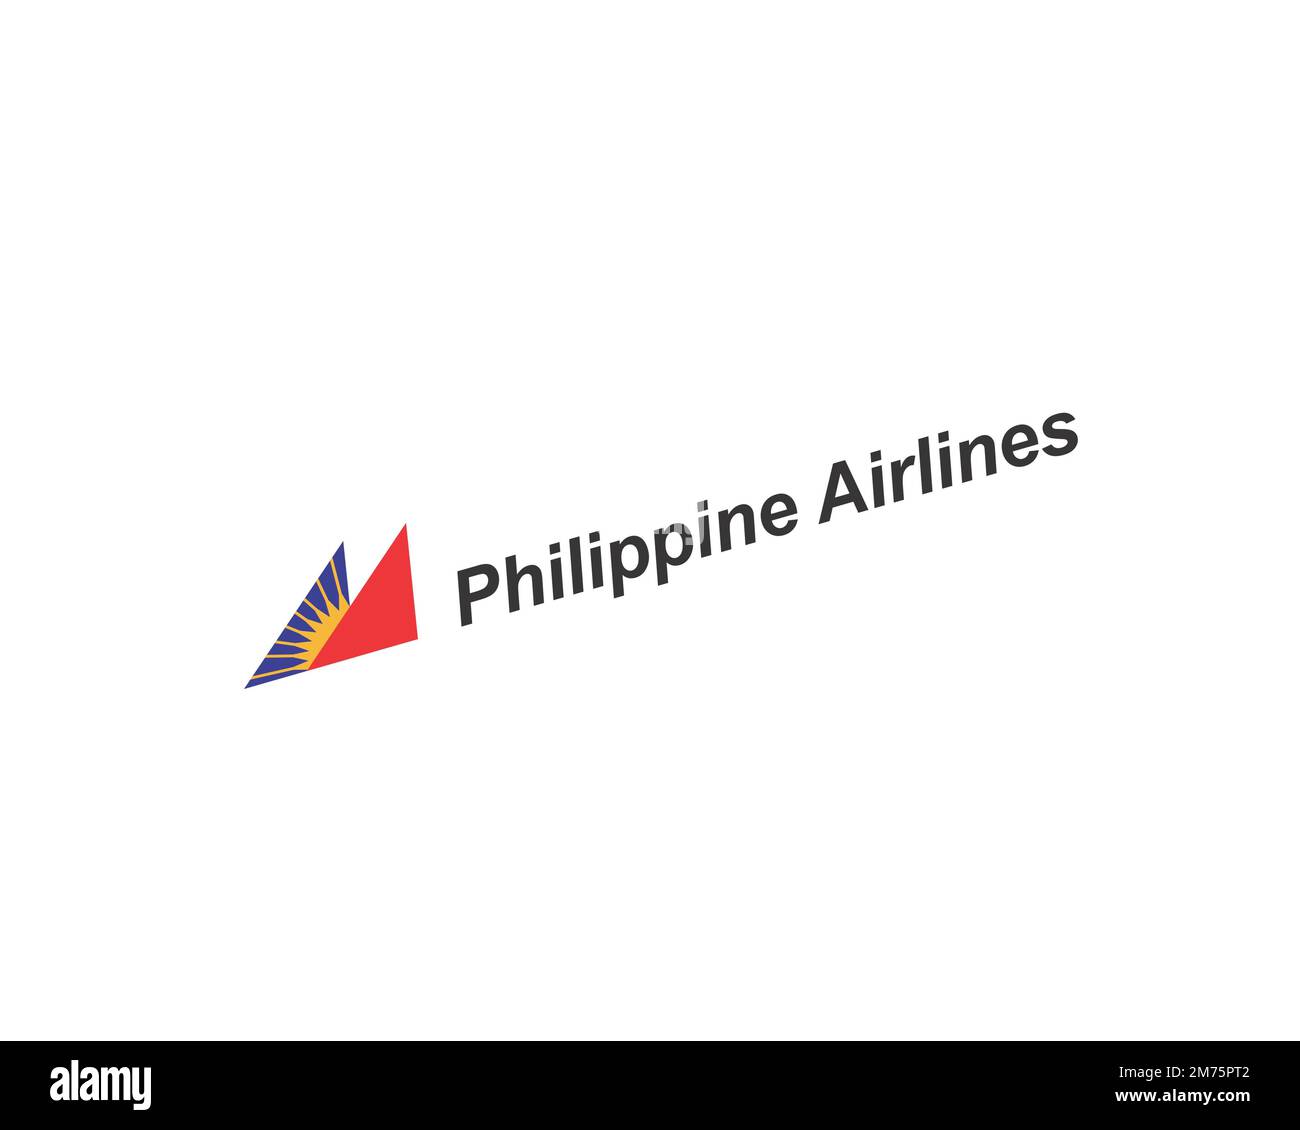 Philippine Airline, rotated logo, white background Stock Photo - Alamy